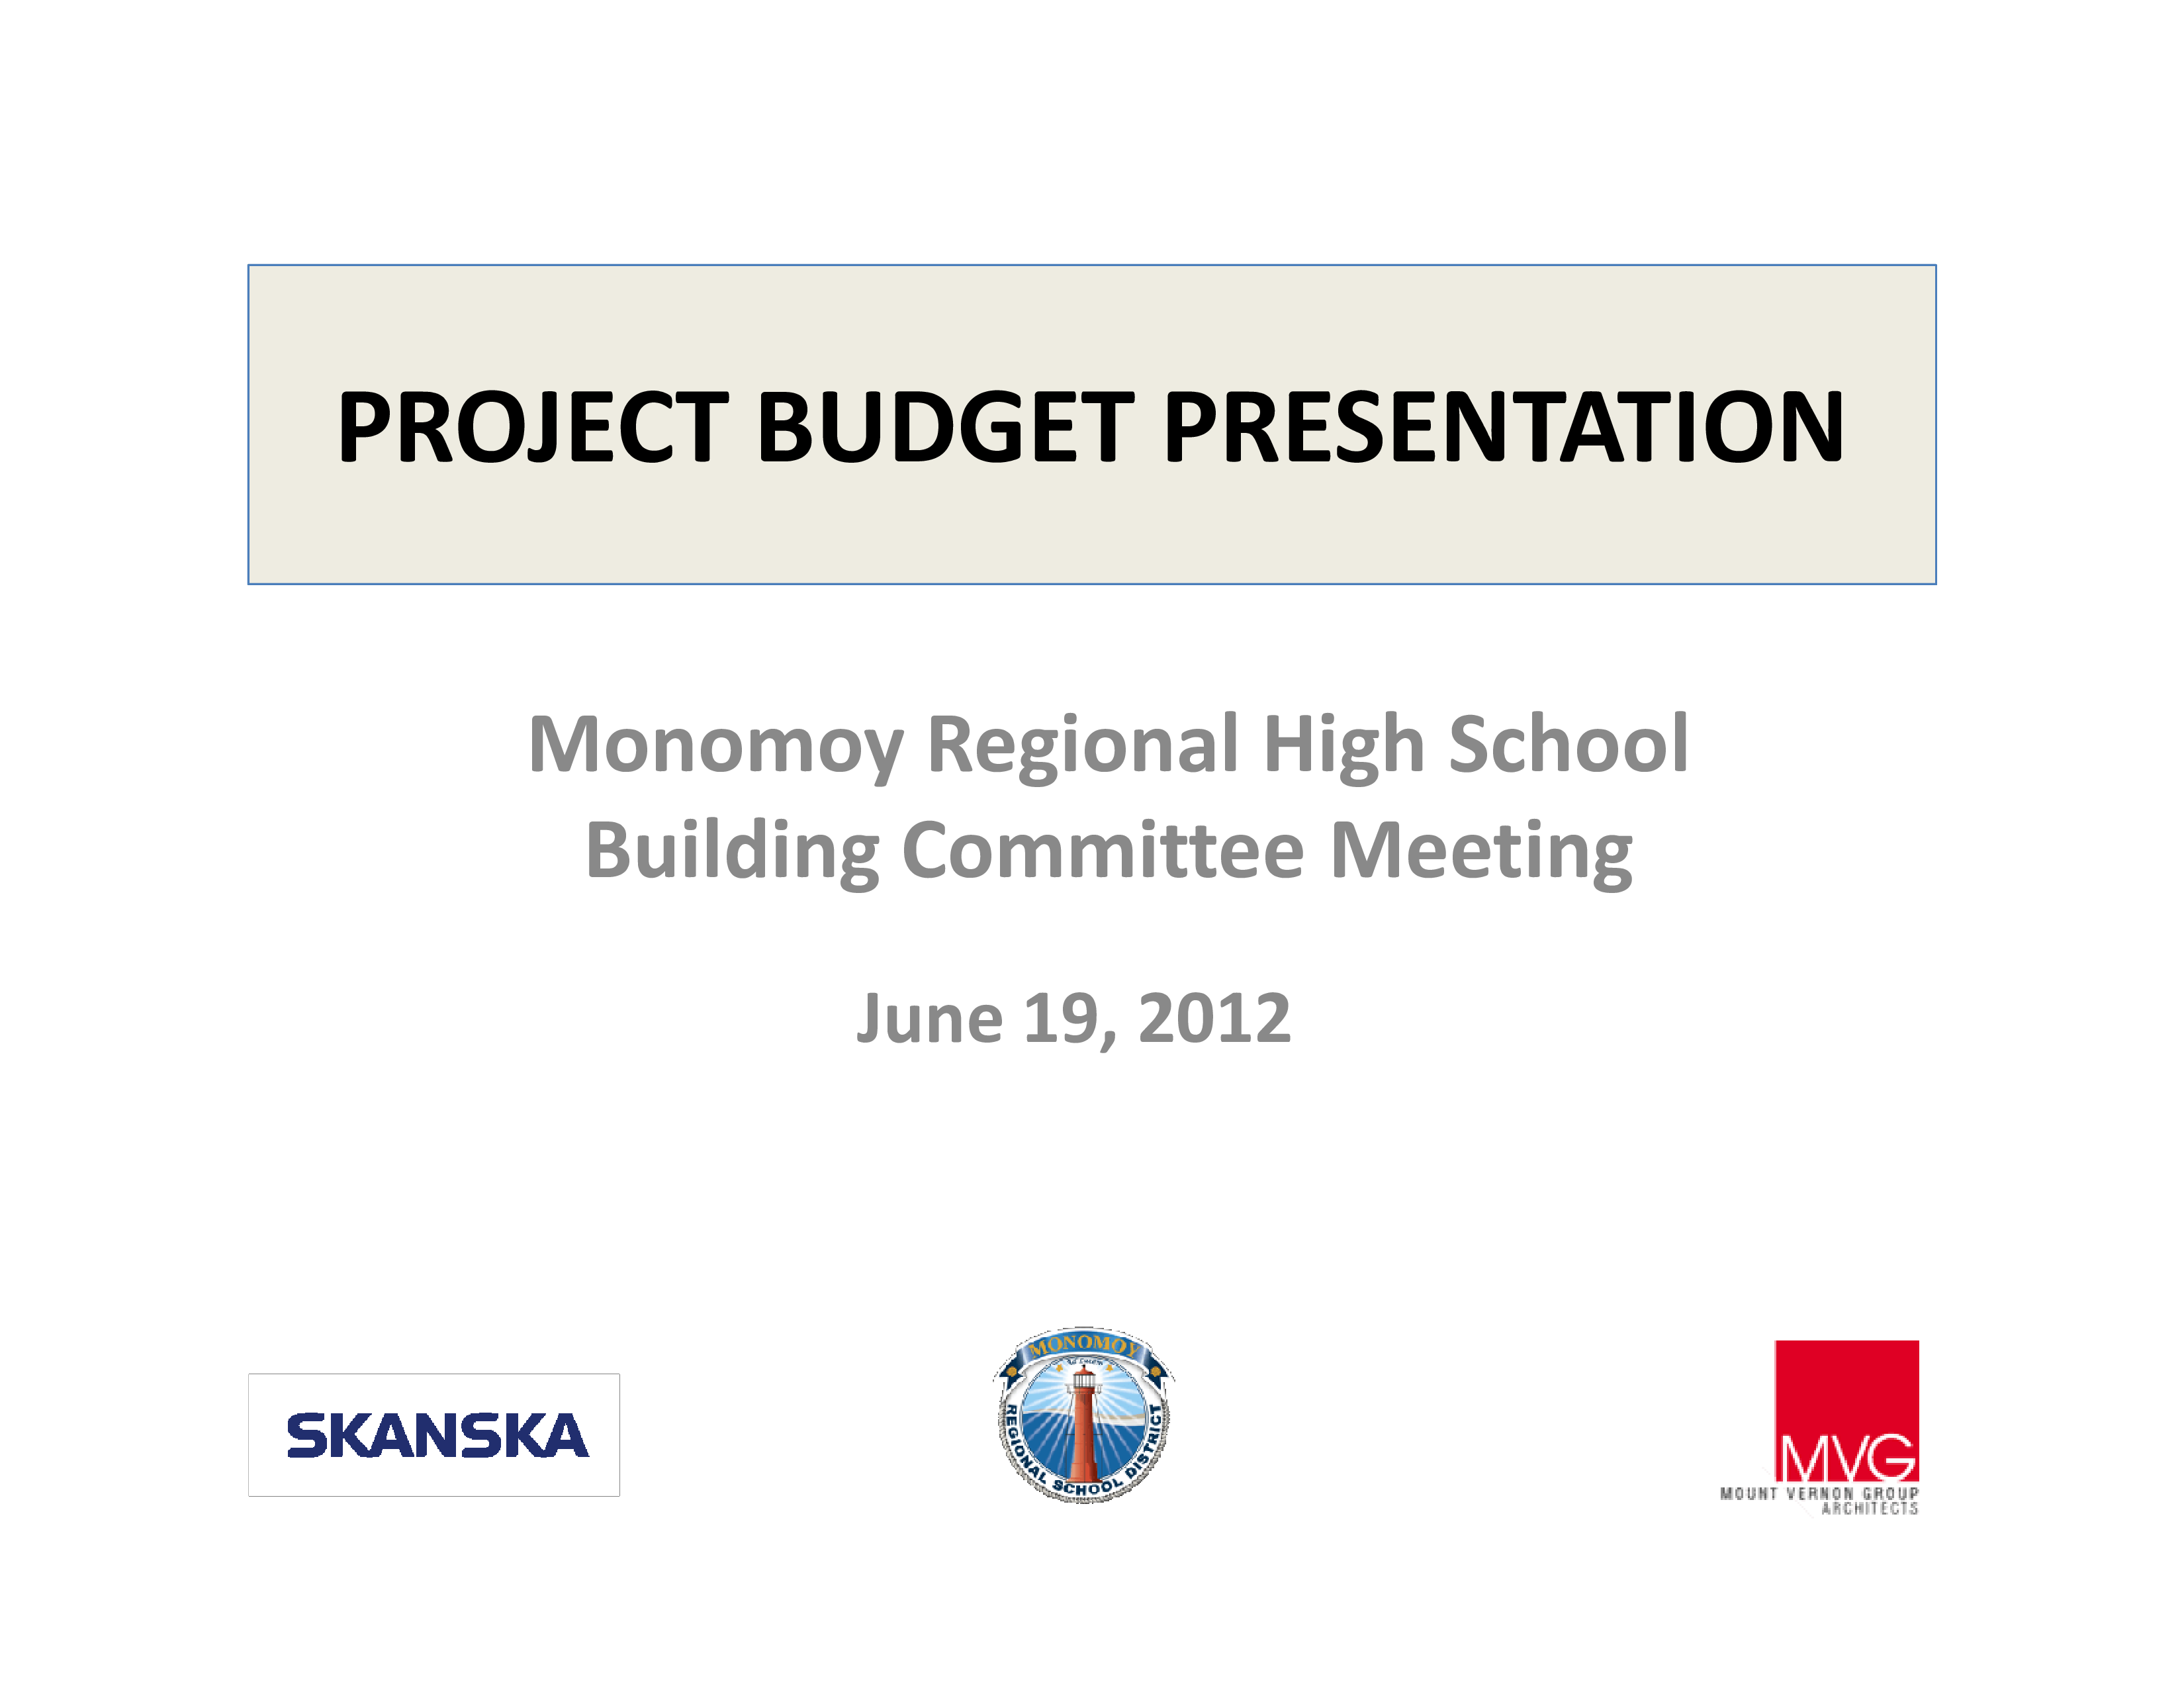 project budget presentation plantilla imagen principal